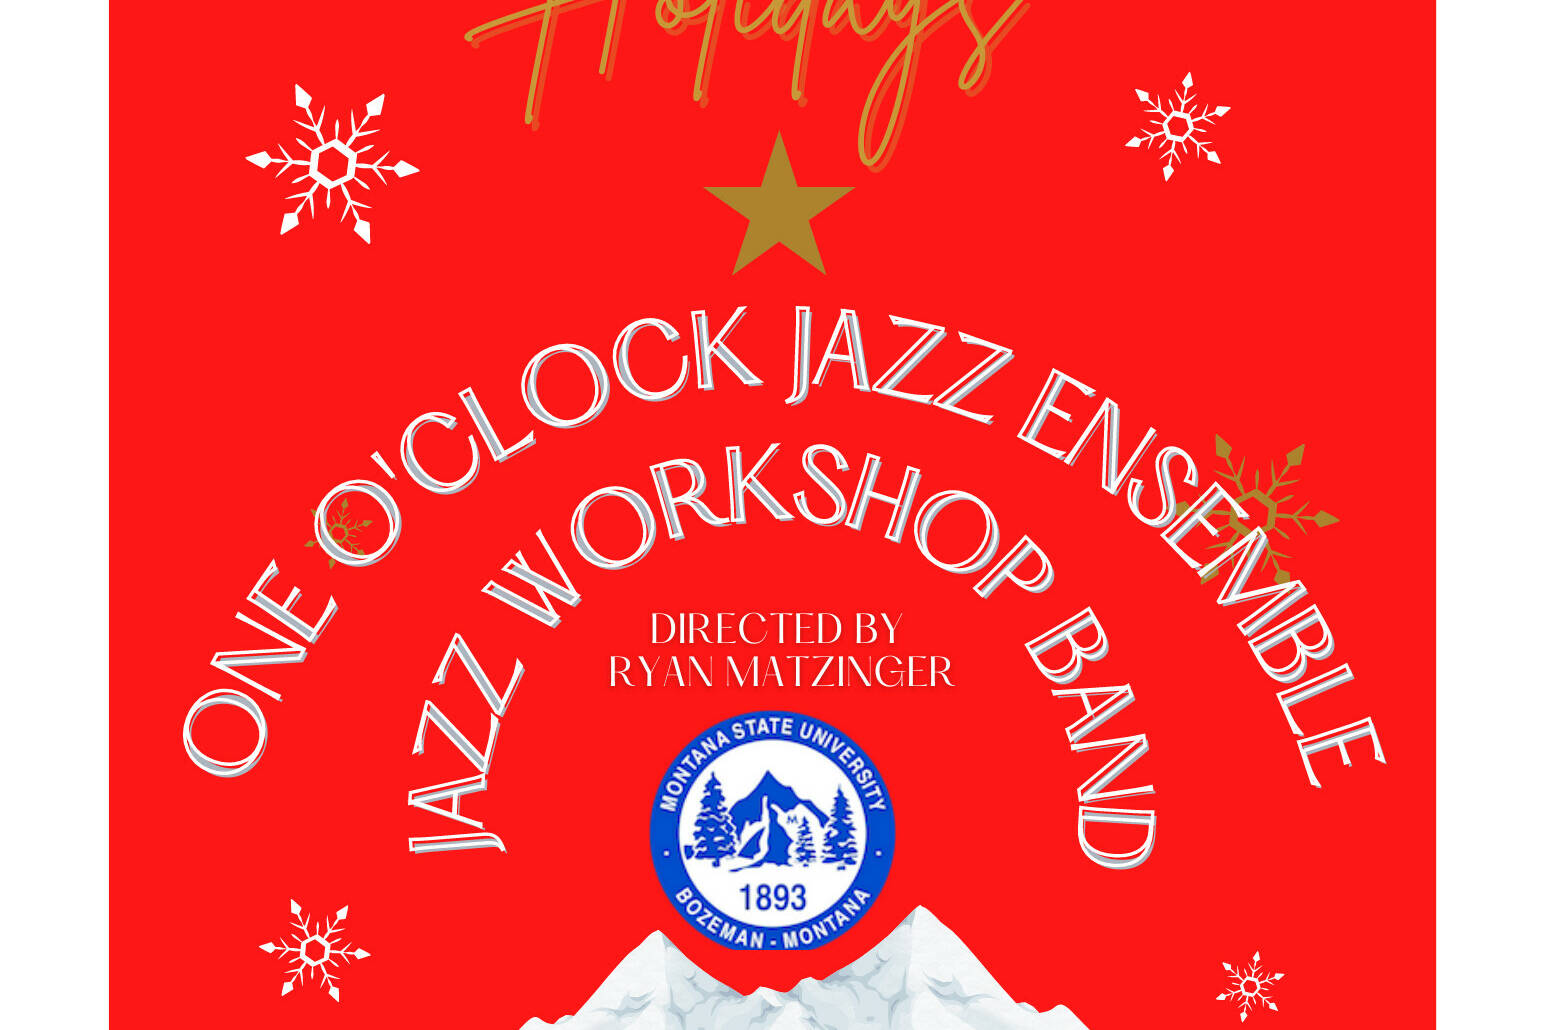 Big Band Jazz Holidays Inspiration Hall